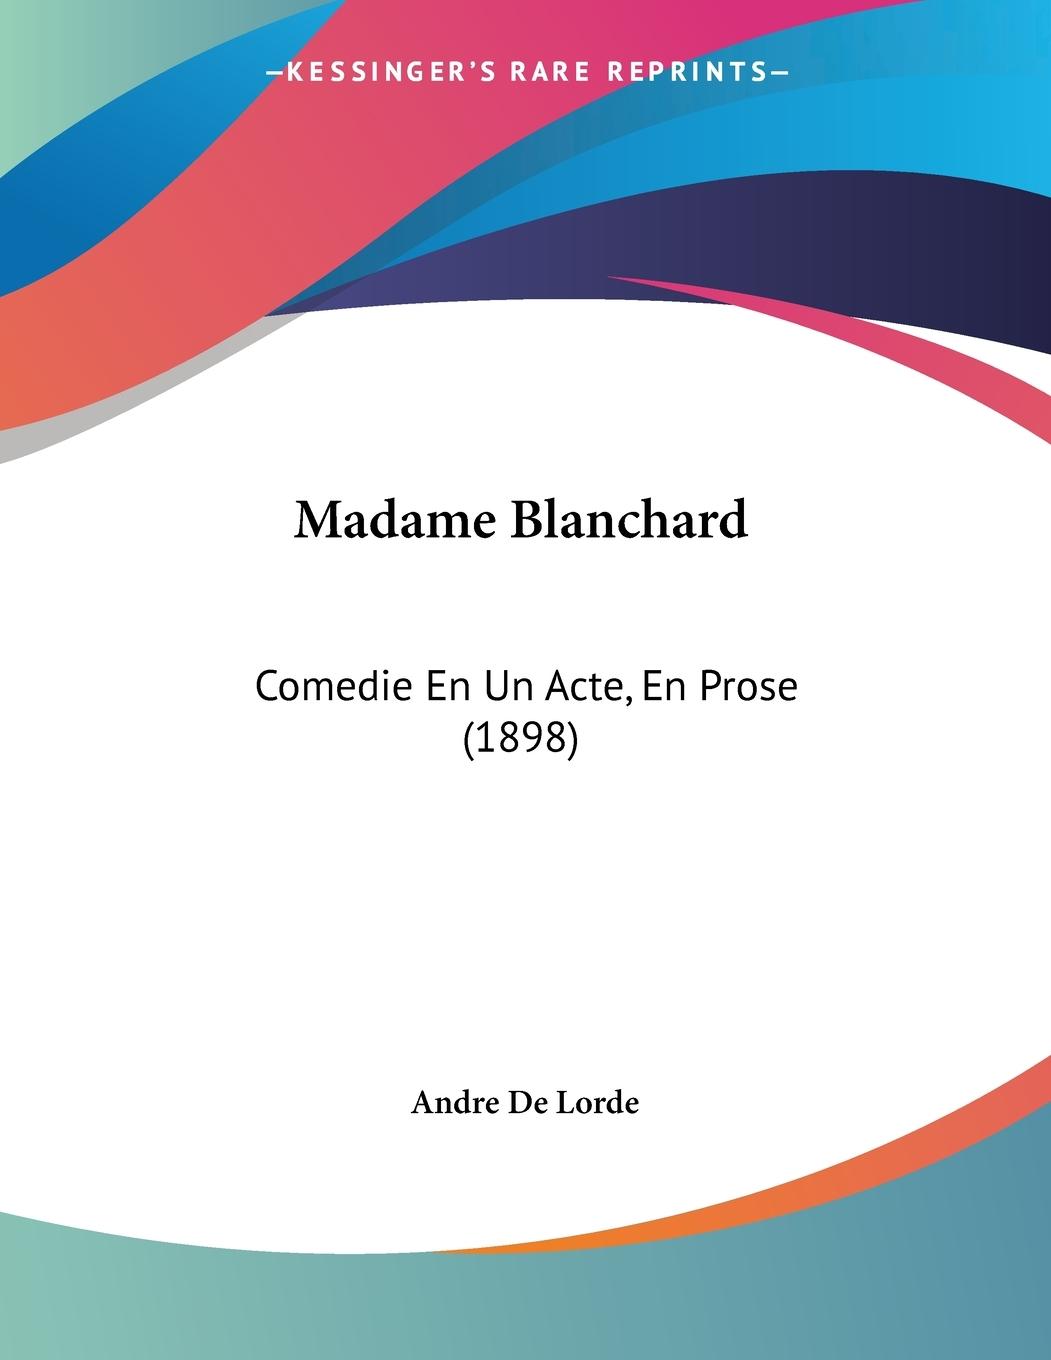 Madame Blanchard - Lorde, Andre De